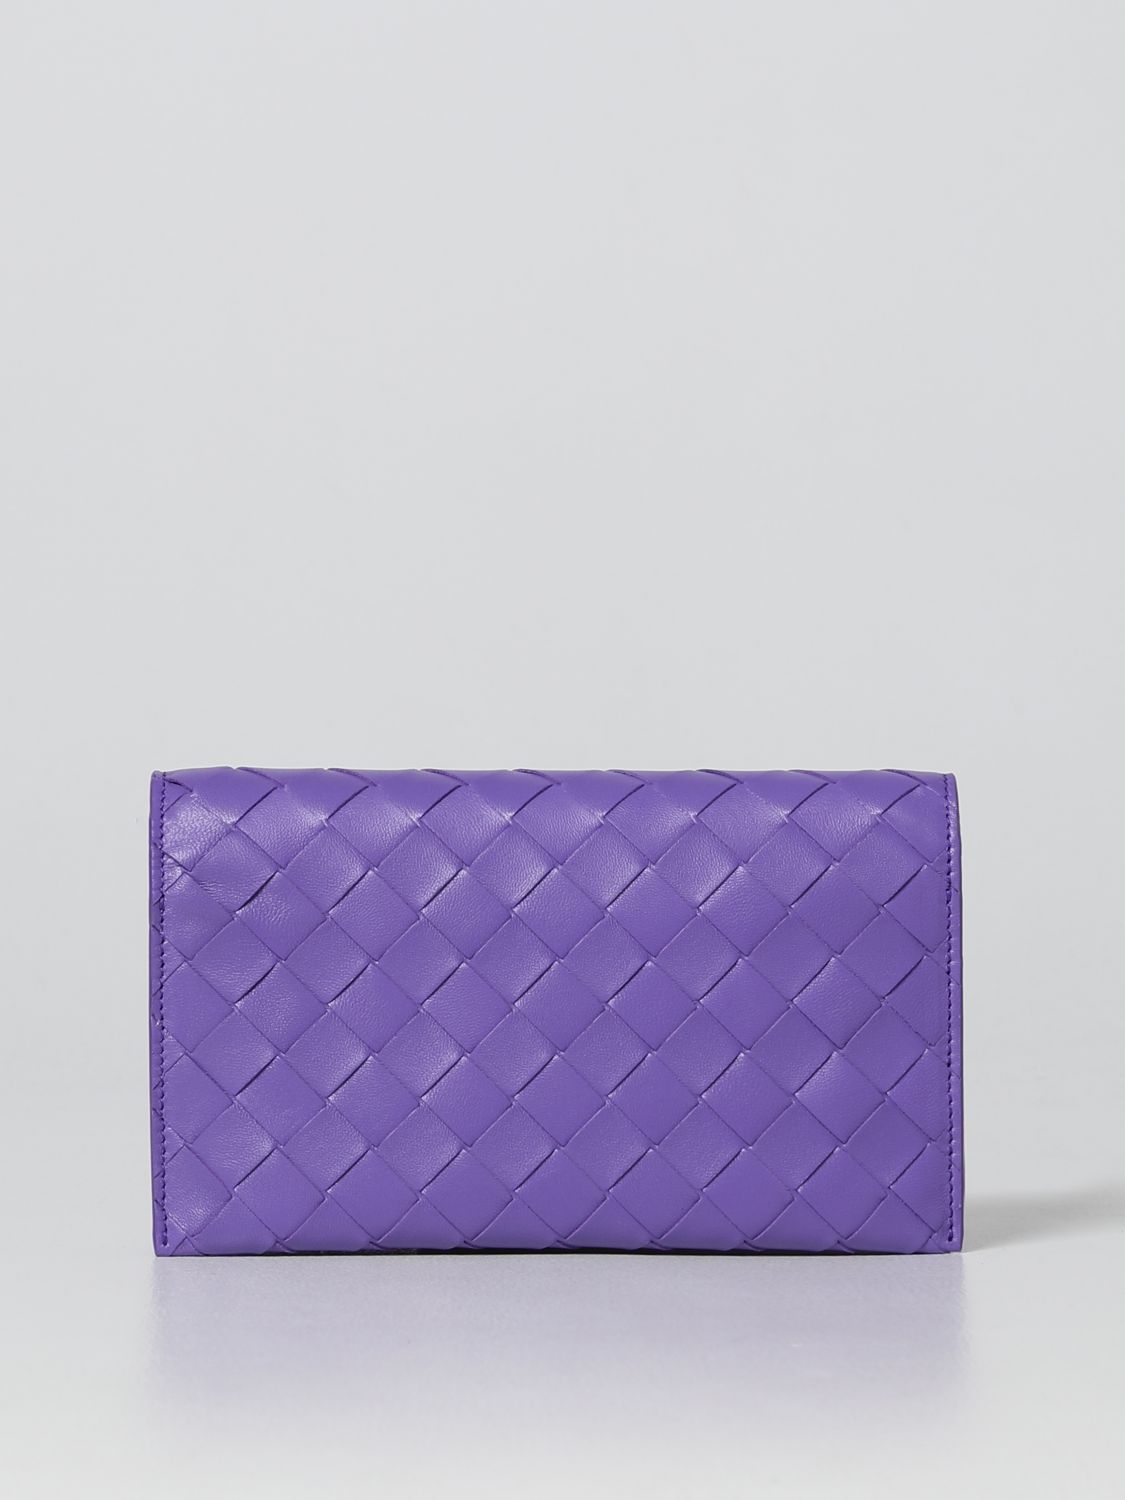 Bottega Veneta Purple Woven Leather Point Shoulder Bag Bottega Veneta